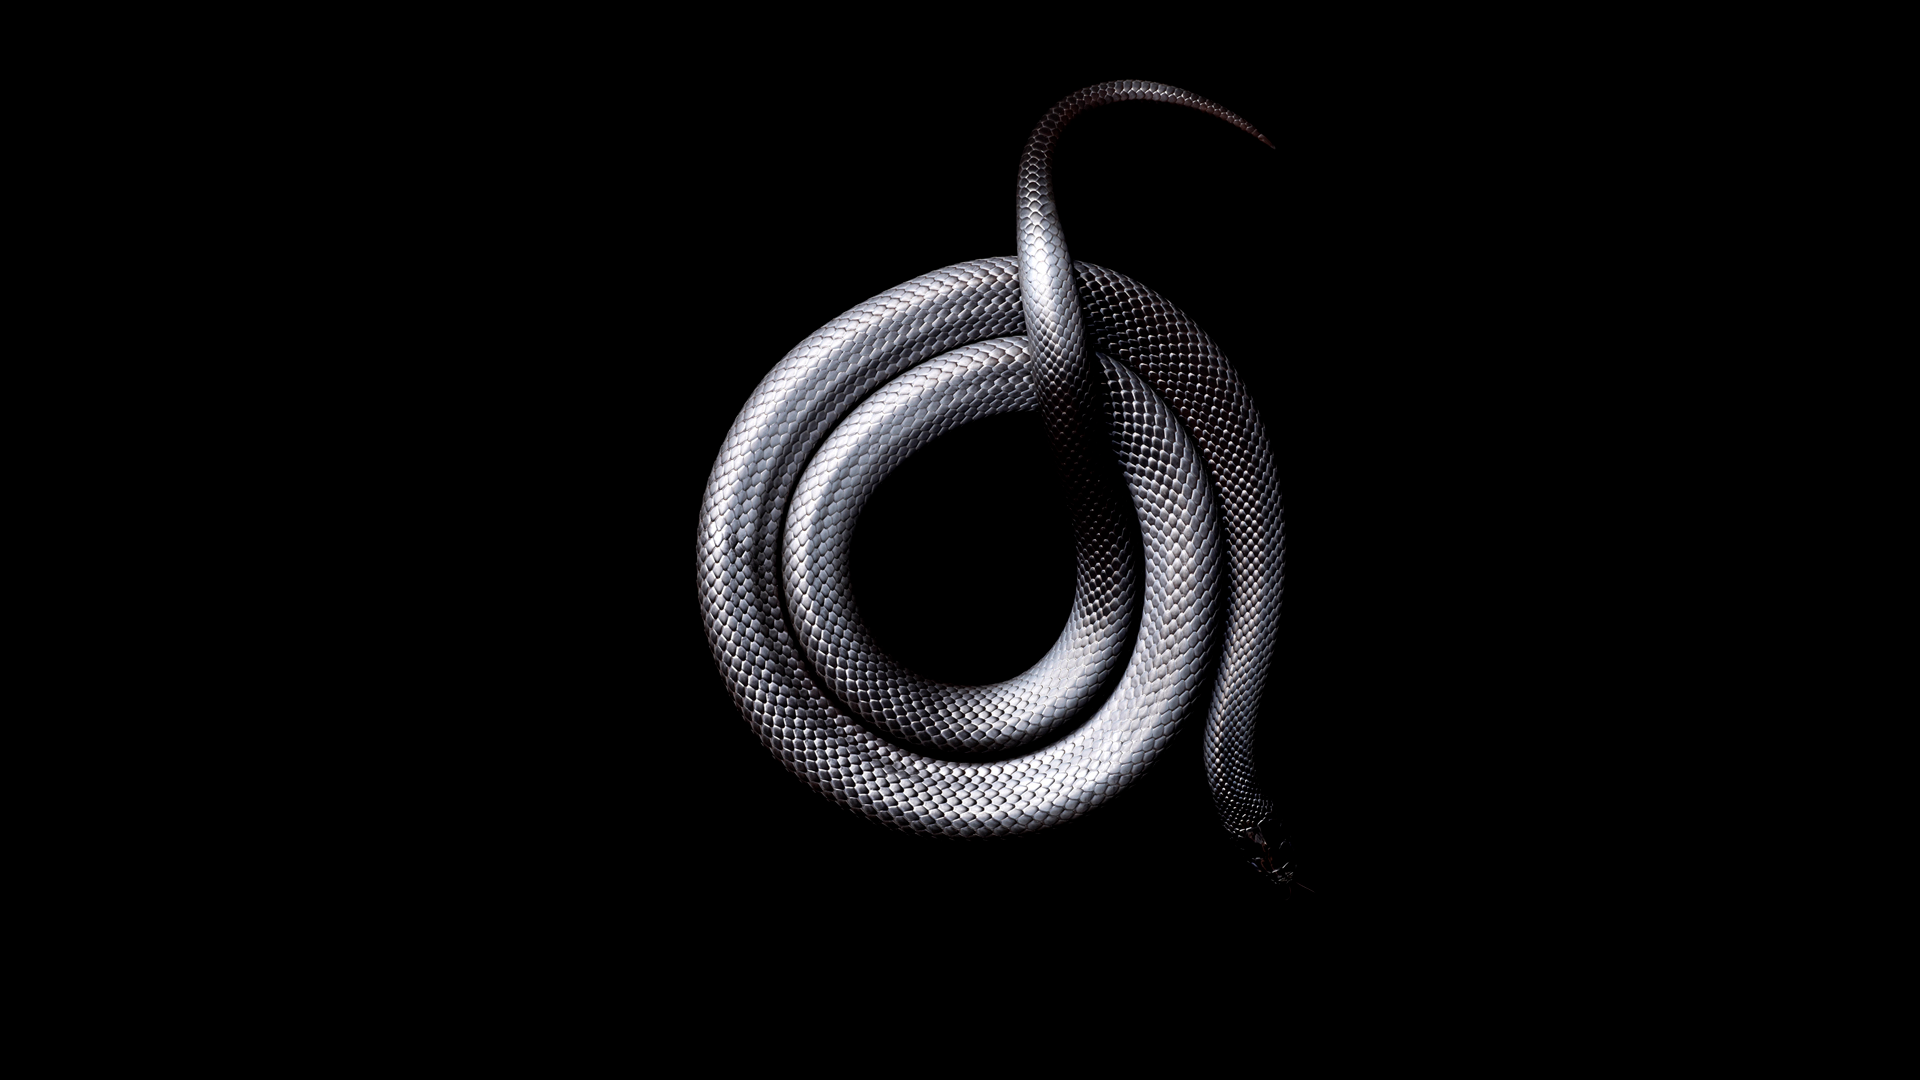 General 1920x1080 snake white black black background dark top view animals reptiles